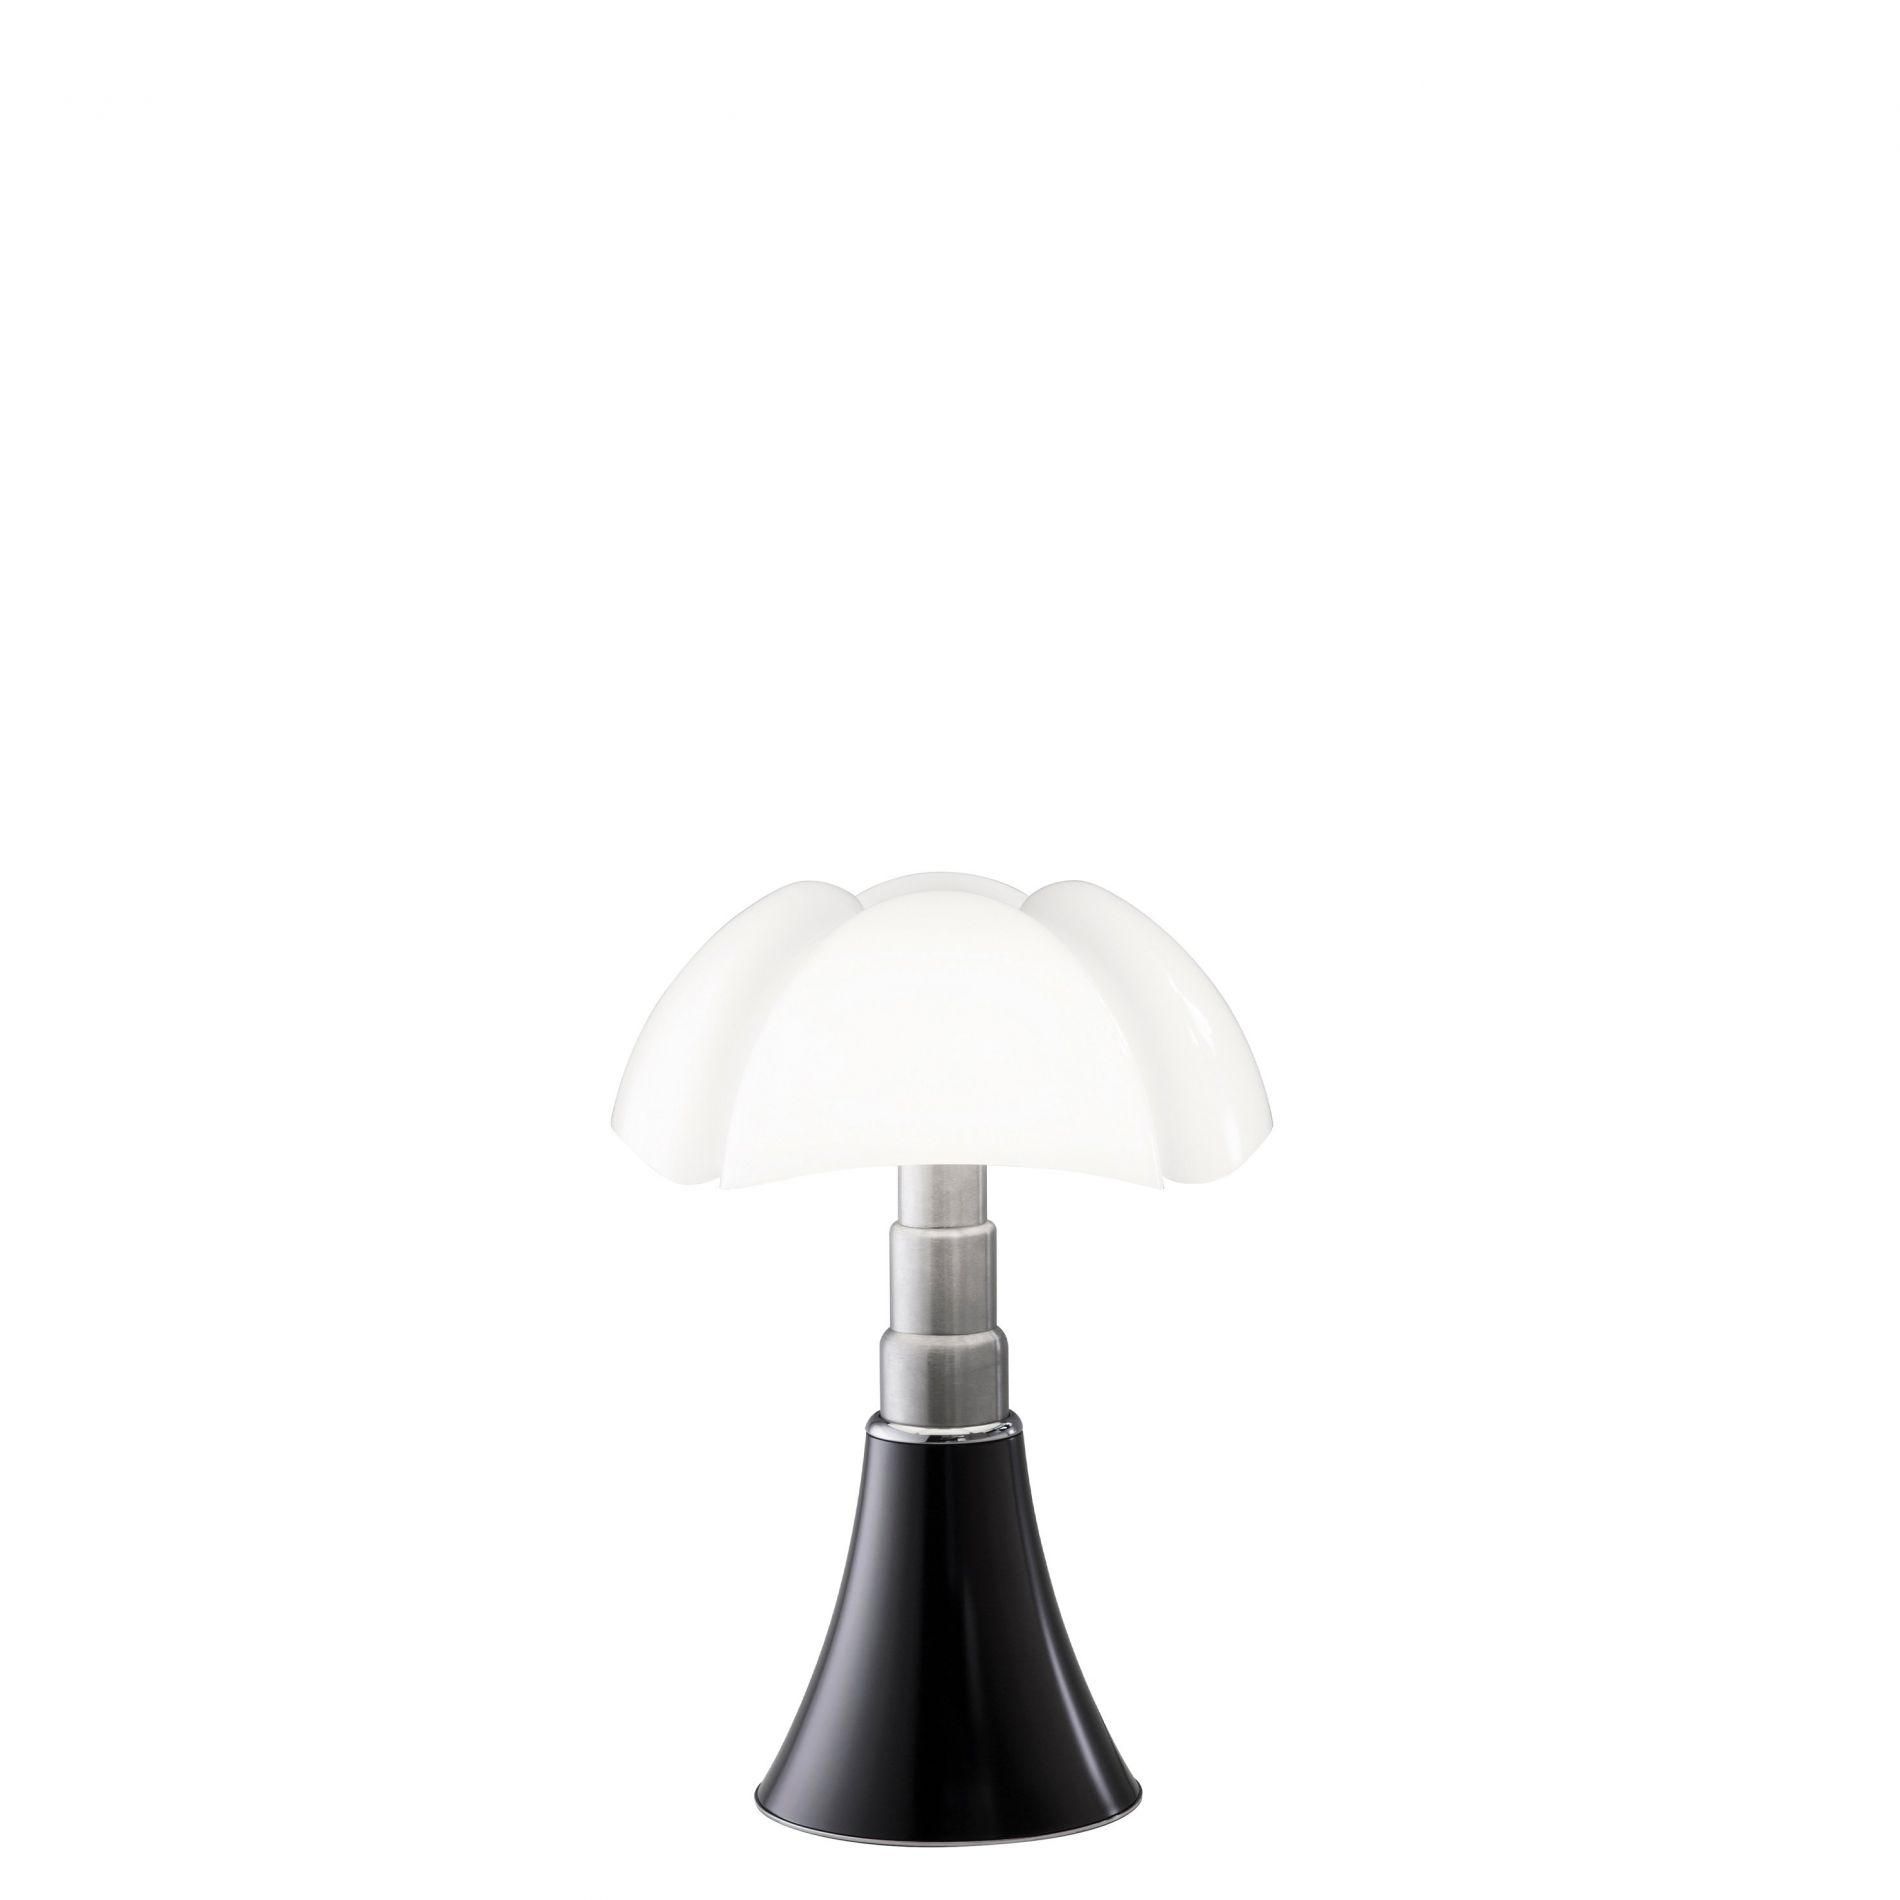 Lampe MINI PIPISTRELLO LED tactile dimmable noire mat